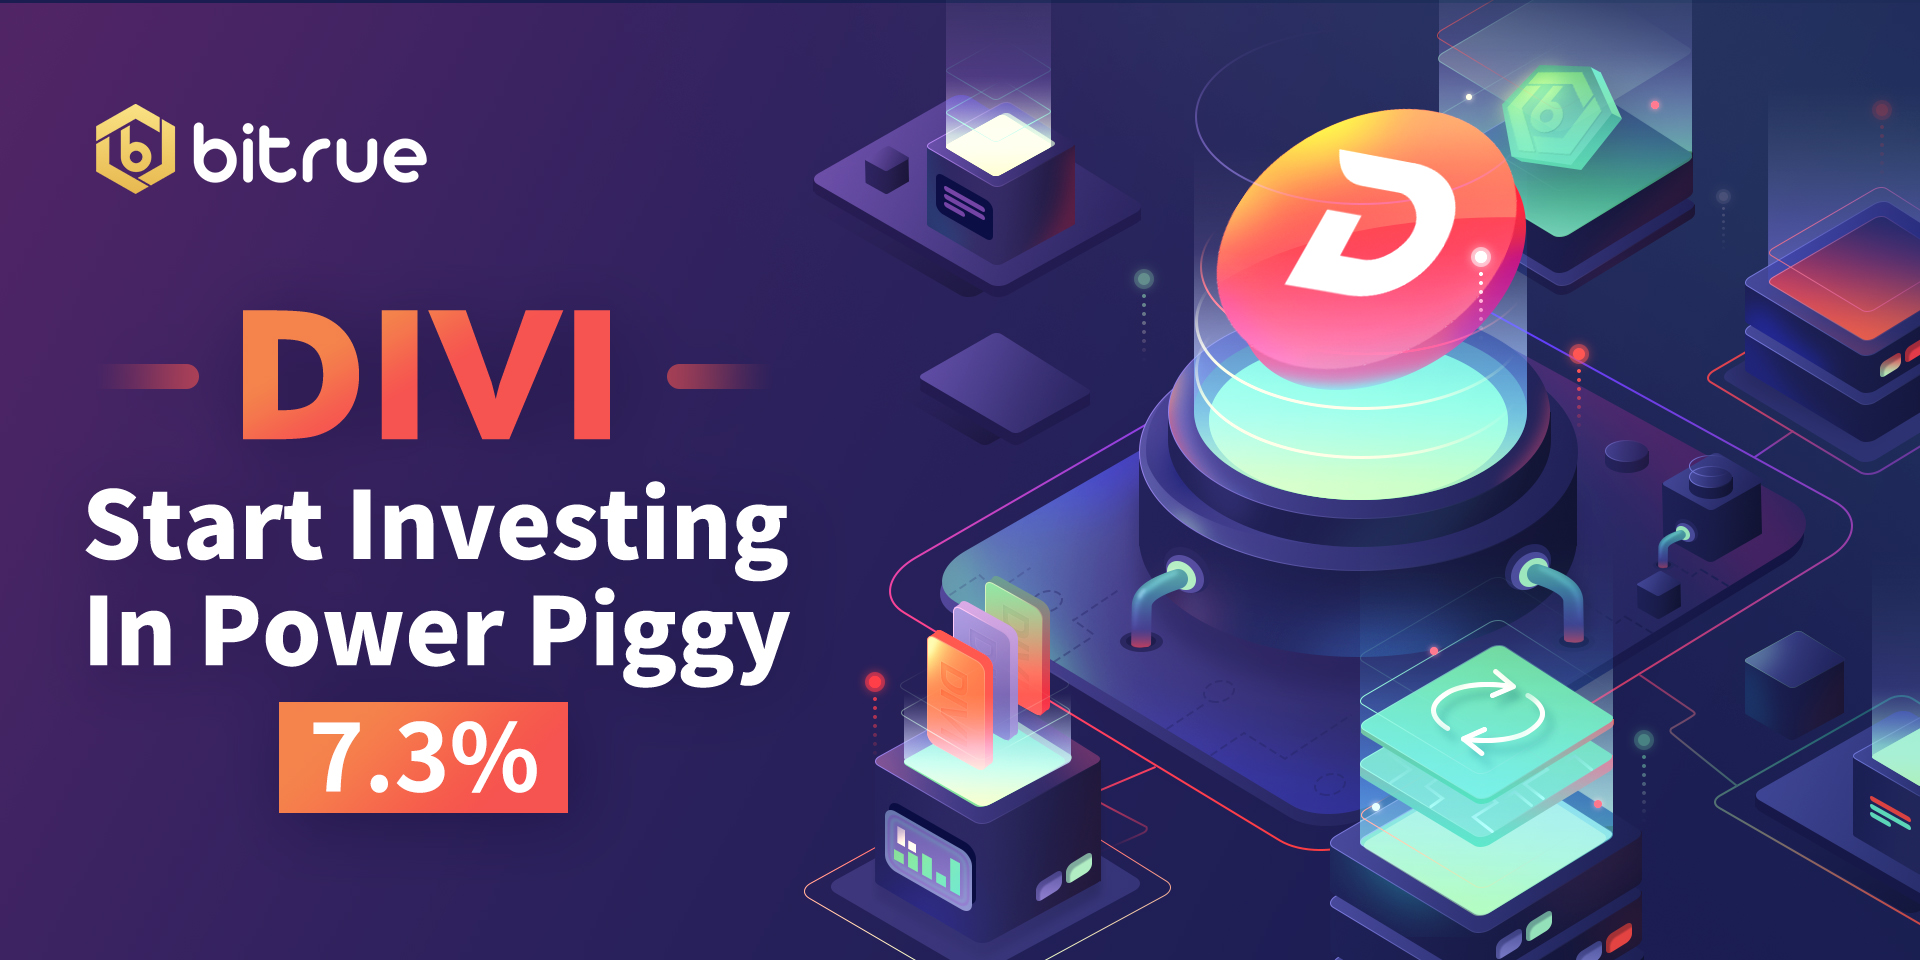 「Bitrue」年利7.3% DIVIがPower Piggy投資スイートに加わりました